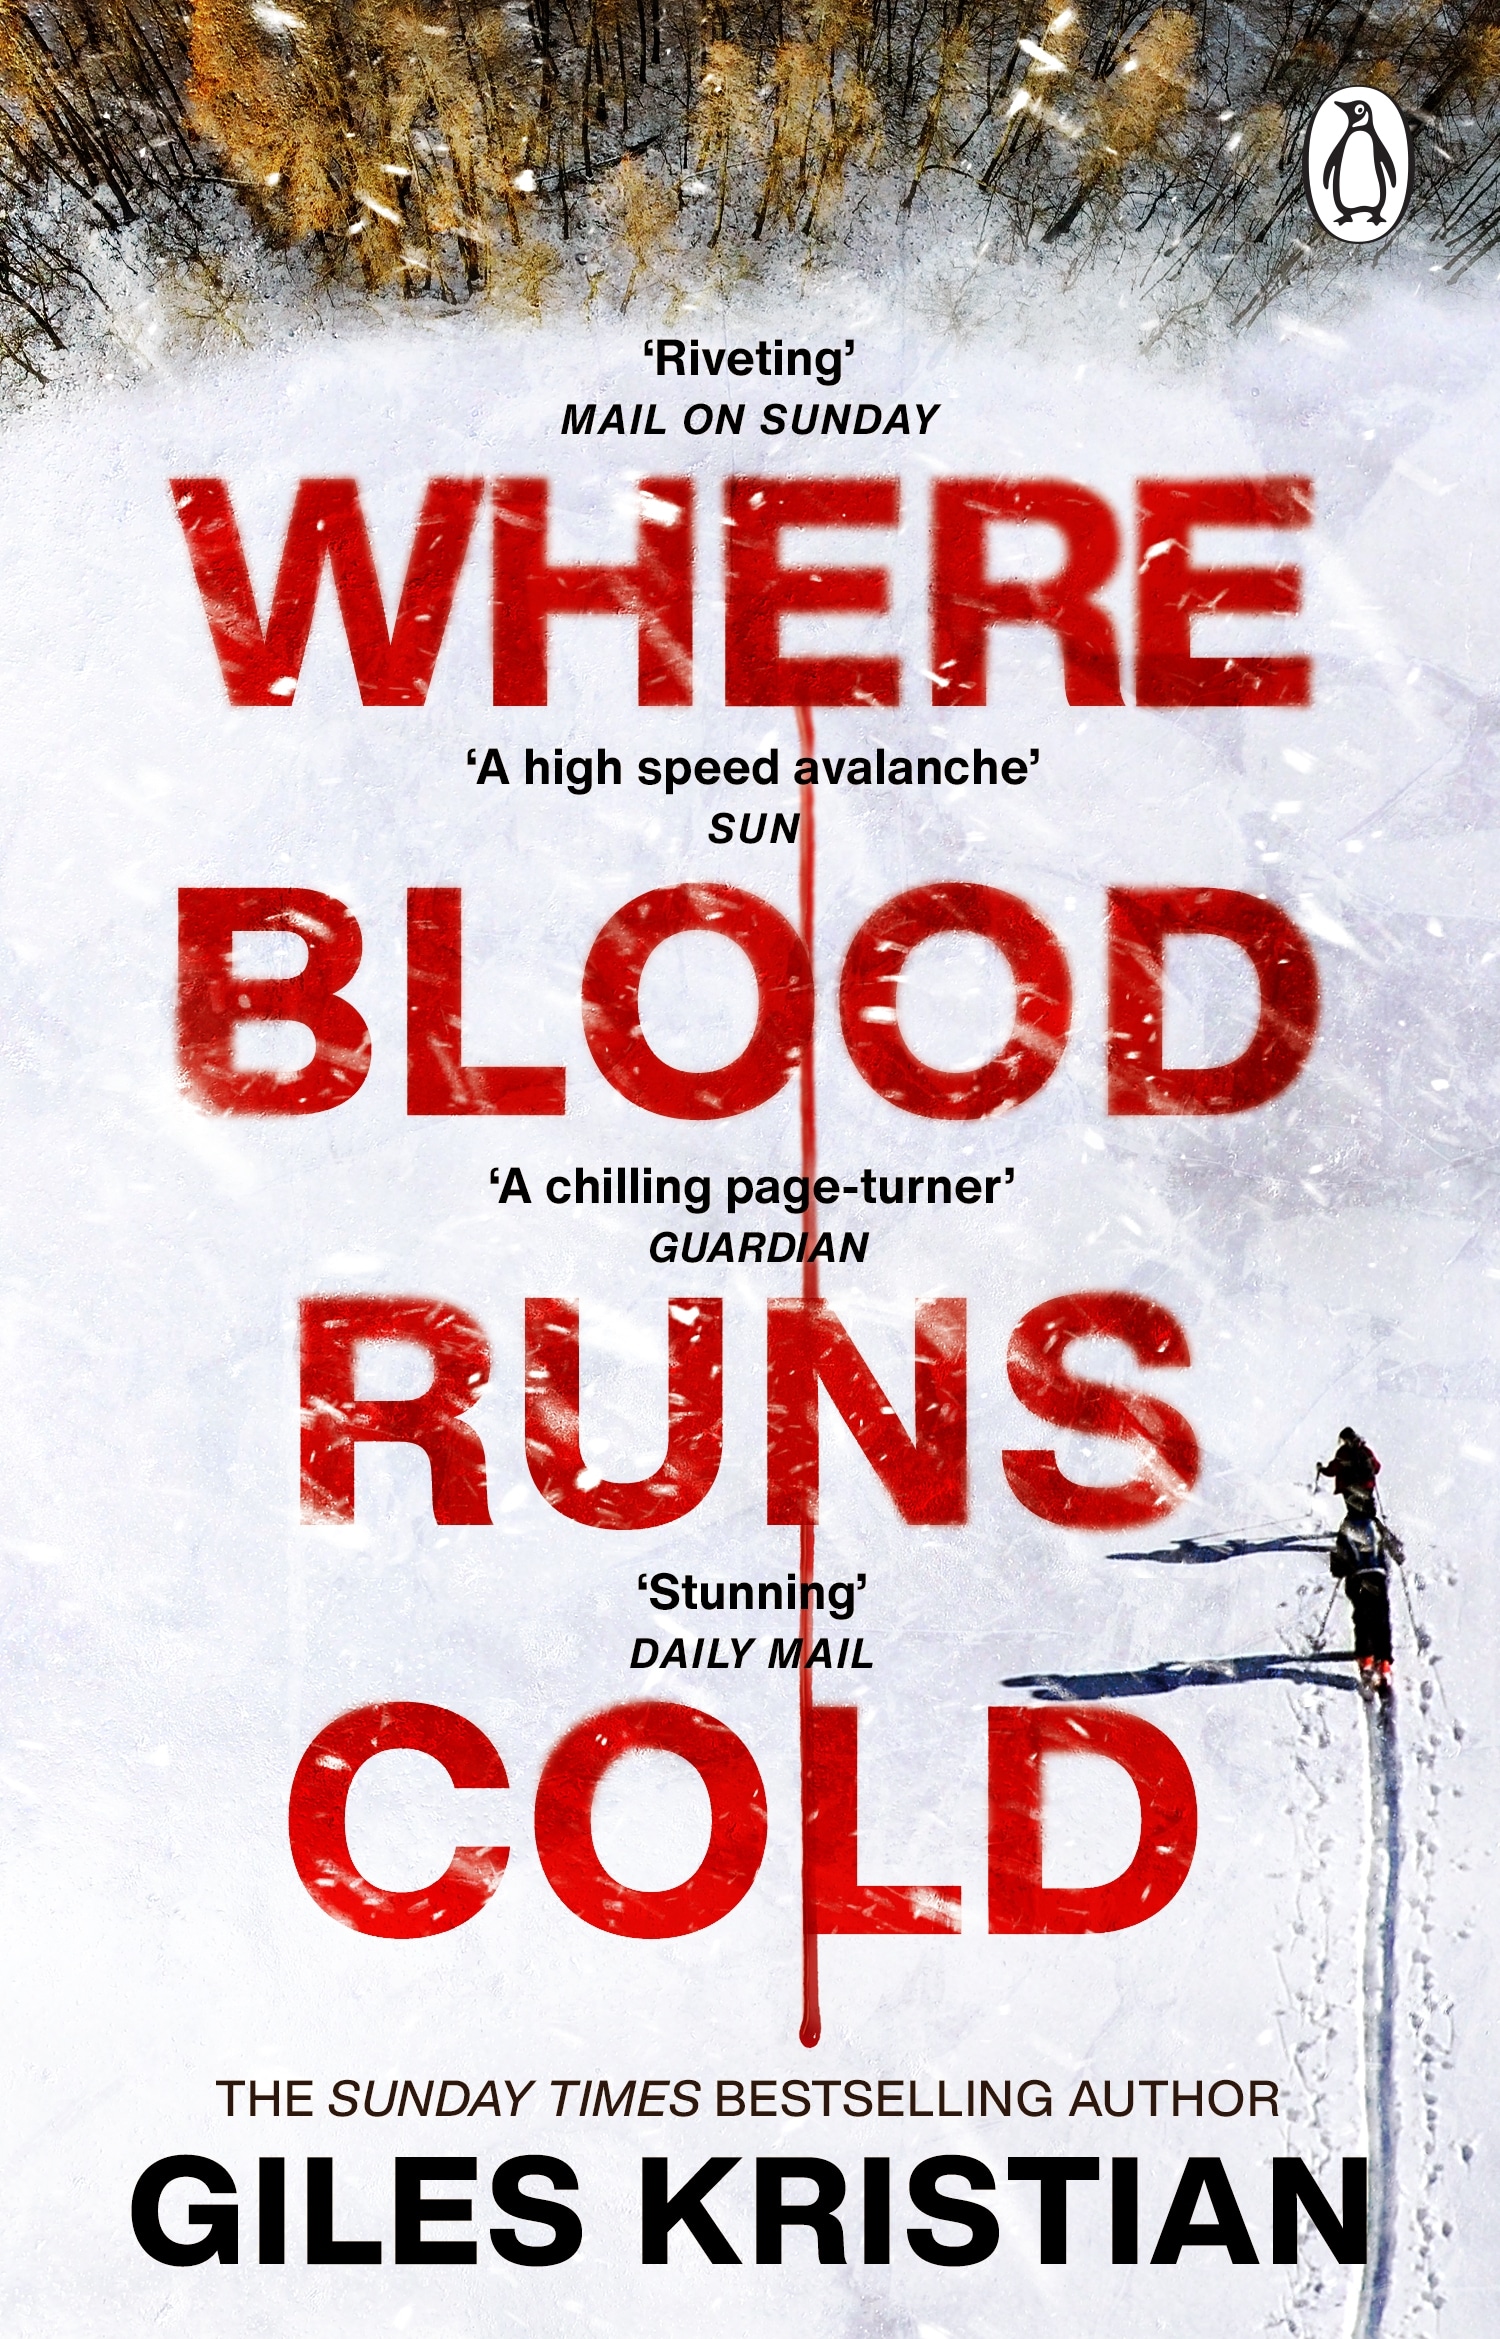 Book “Where Blood Runs Cold” by Giles Kristian — November 24, 2022